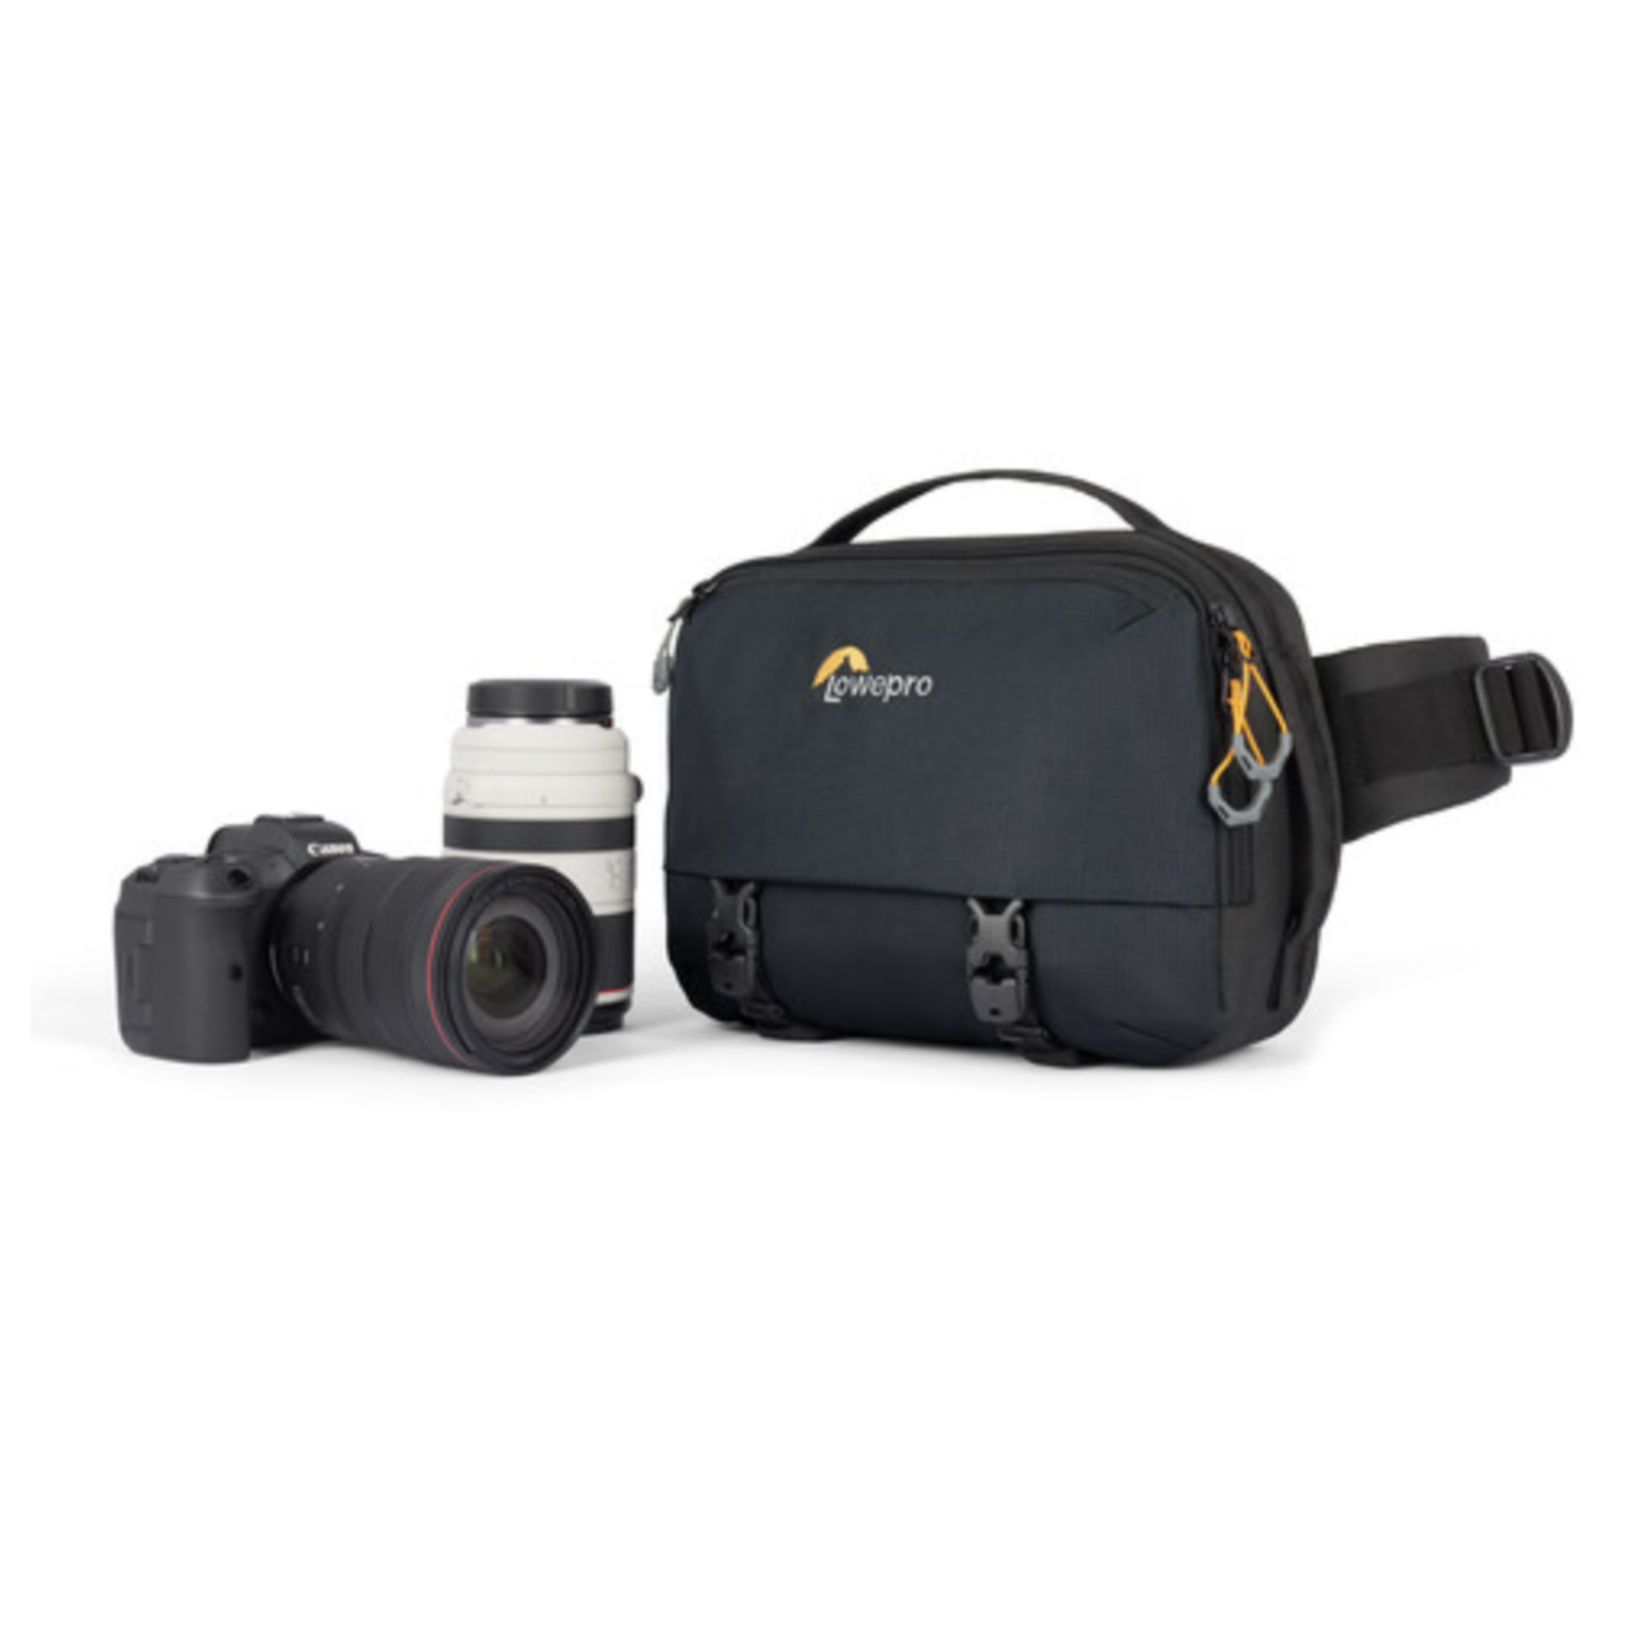 LowePro SLR backpack Camera Bag - photo/video - by owner - electronics sale  - craigslist